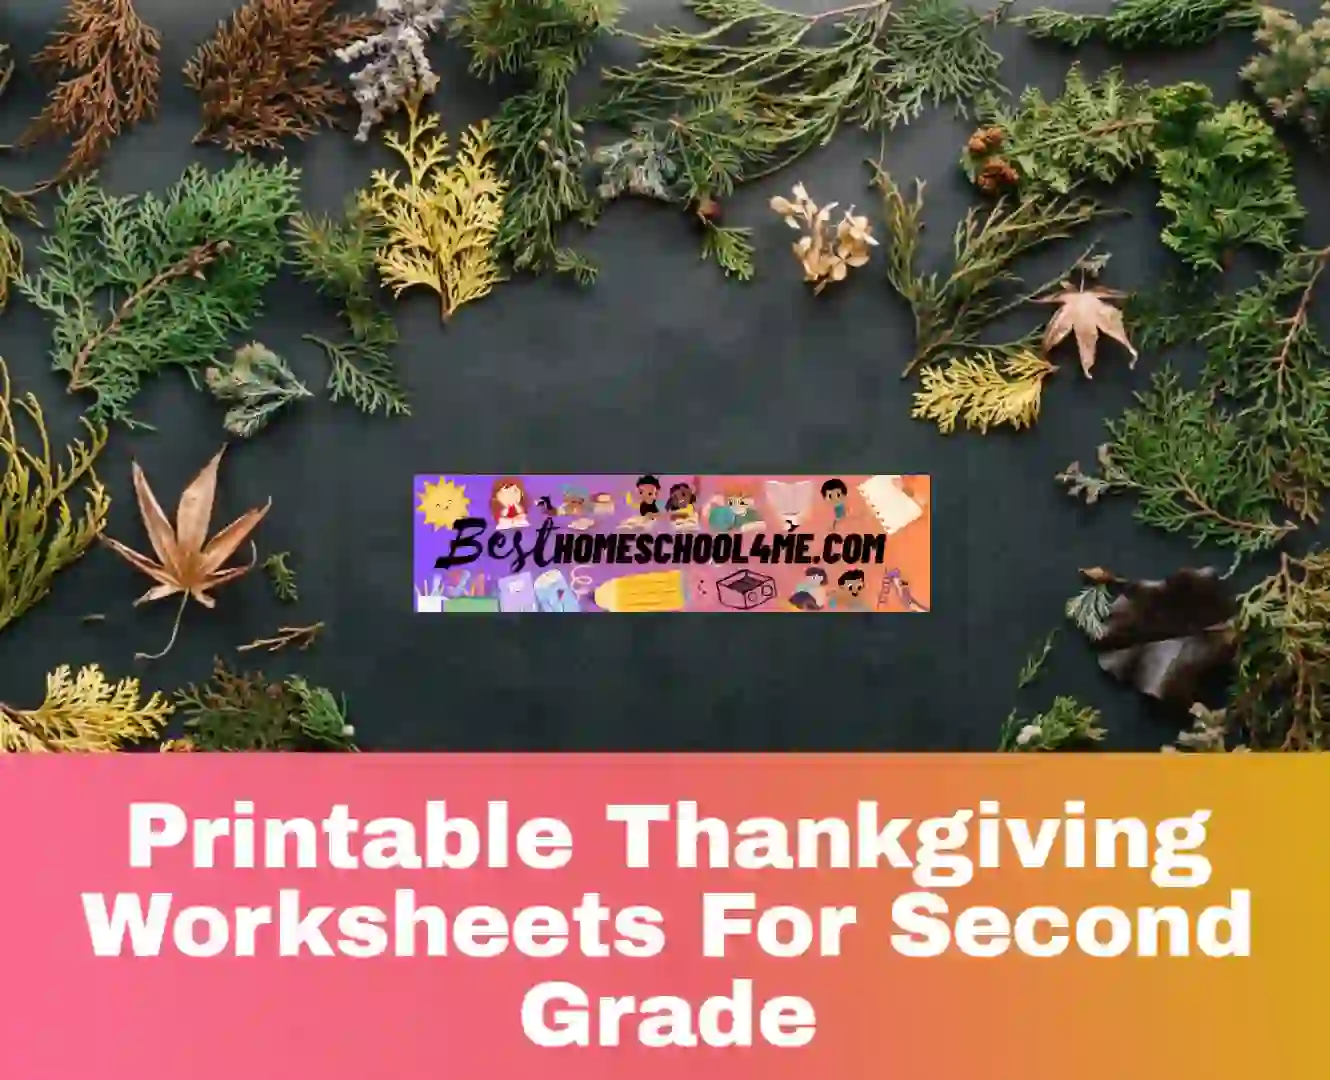 Printable Thanksgiving Worksheets For Second Grade, Thanksgiving Worksheets For Second Grade, Second Grade Thanksgiving Worksheets, Thanksgiving Second Grade Worksheet